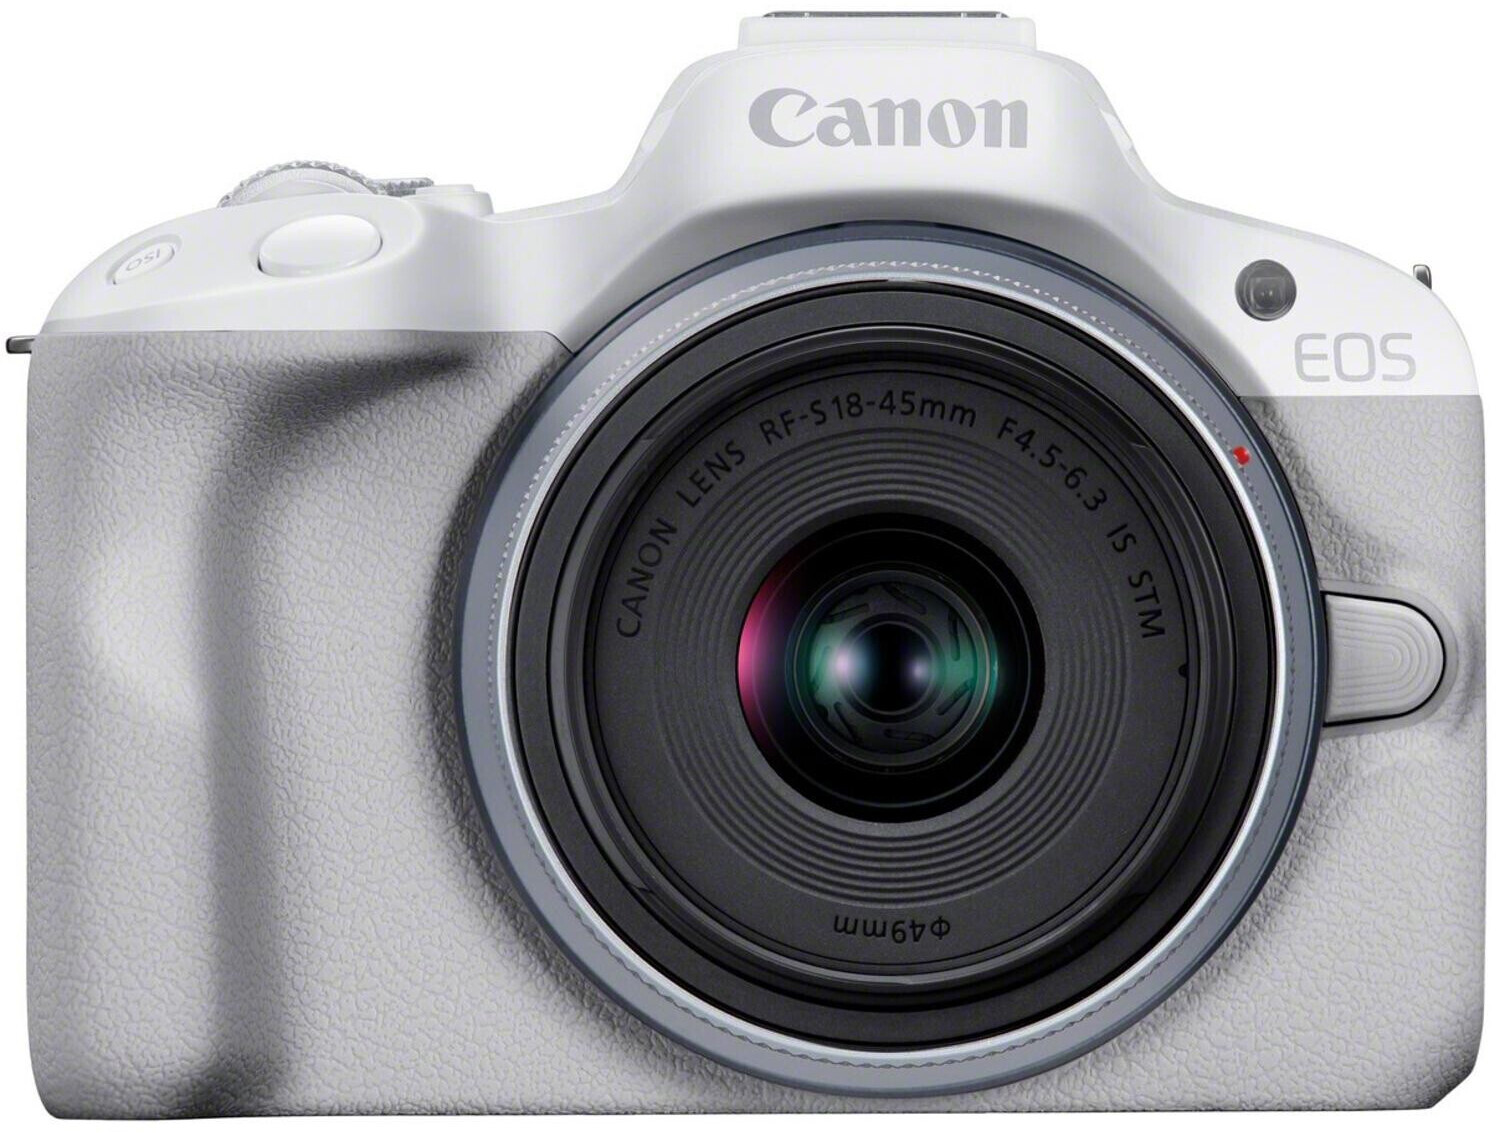 Canon EOS weiß mm R50 | bei Preisvergleich 748,88 18-45 Kit ab €